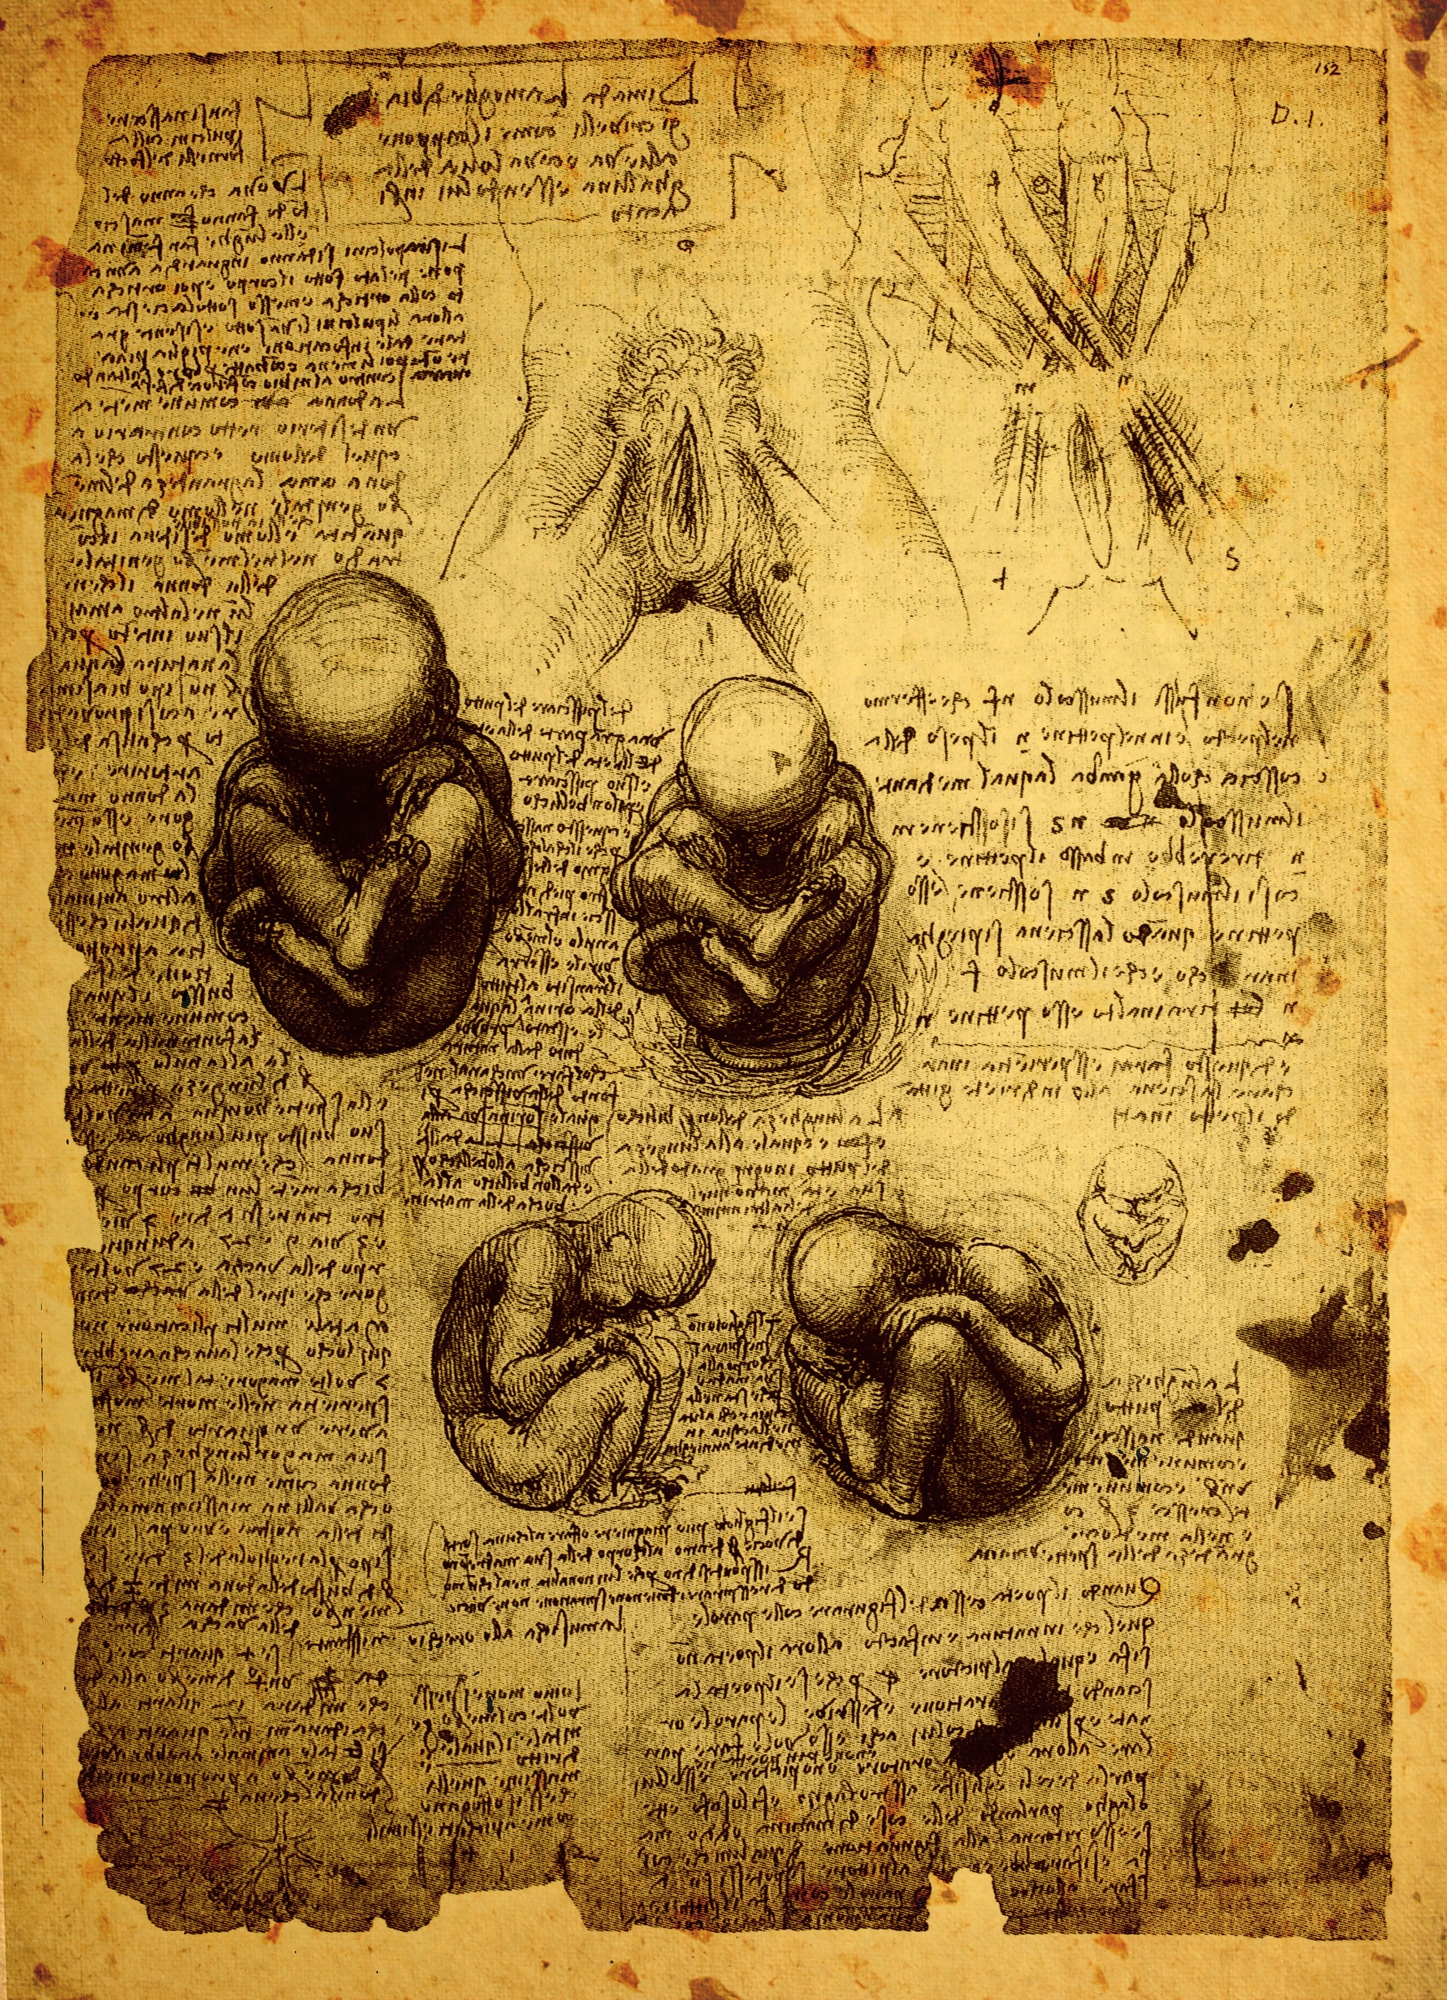 Biography of Leonardo da Vinci – Parents, Paintings & Interests